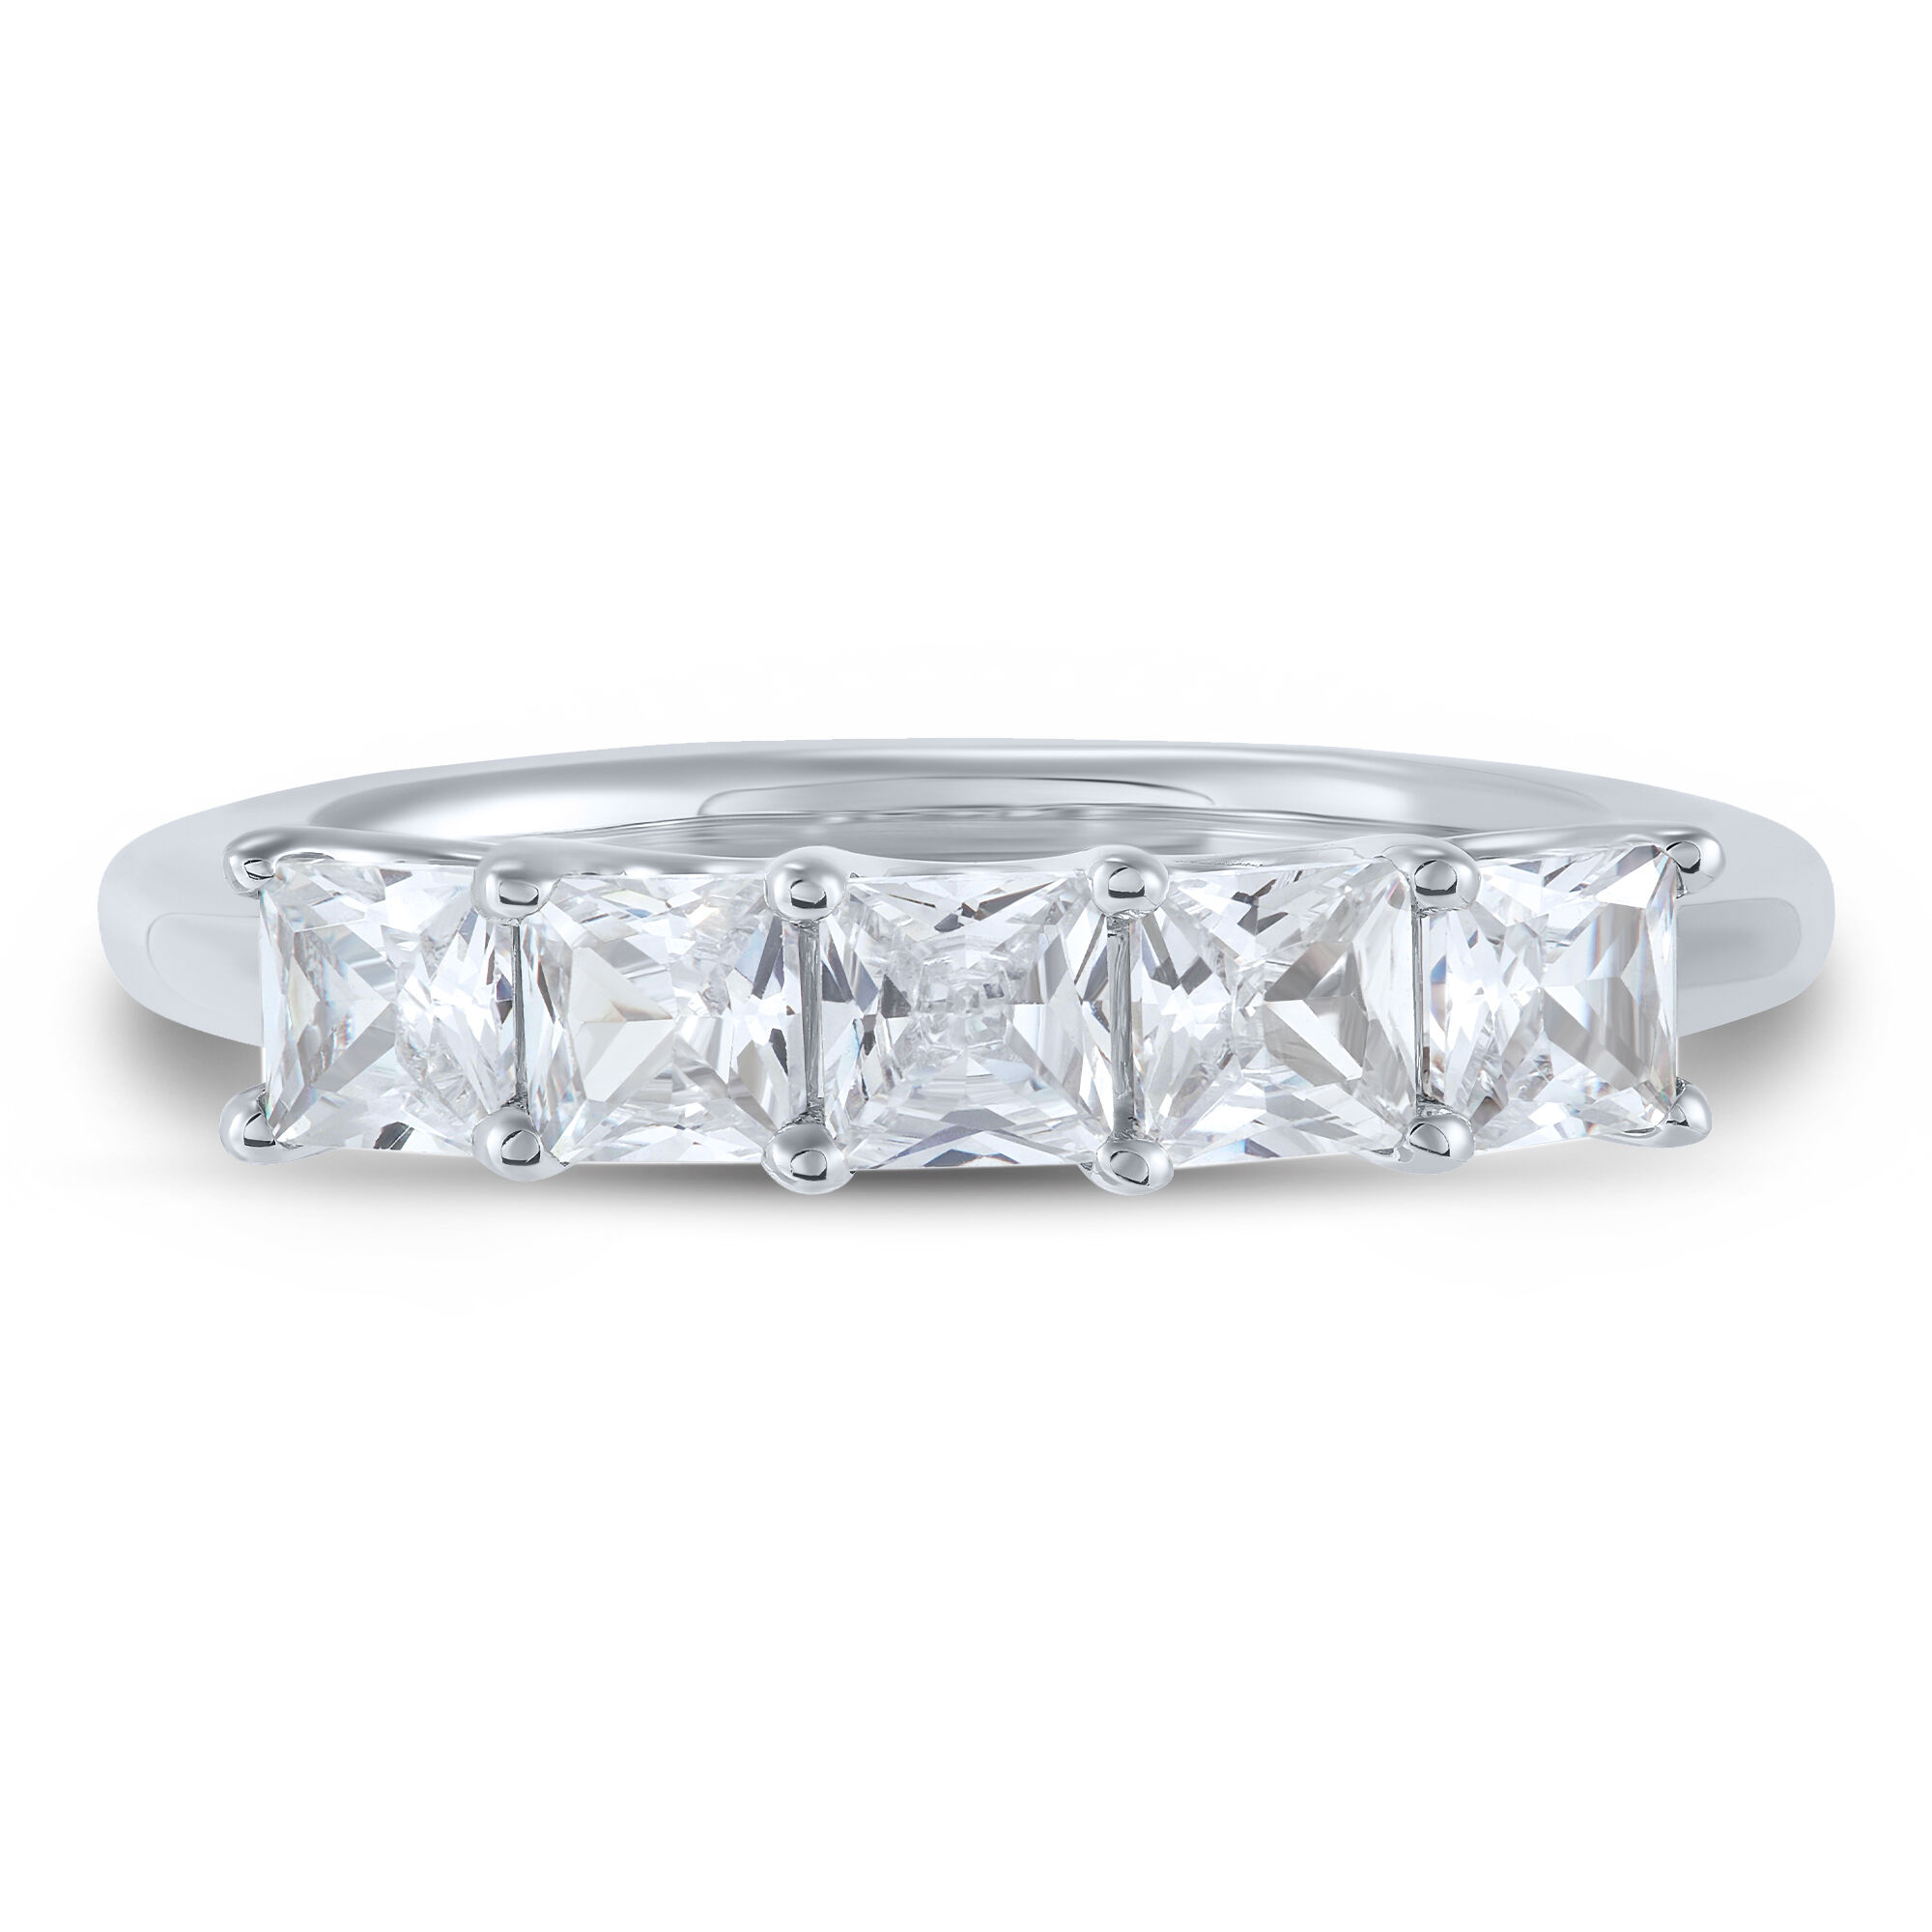 Best Five Year Anniversary Gift Ideas: 5 Stone Diamond Rings – deBebians